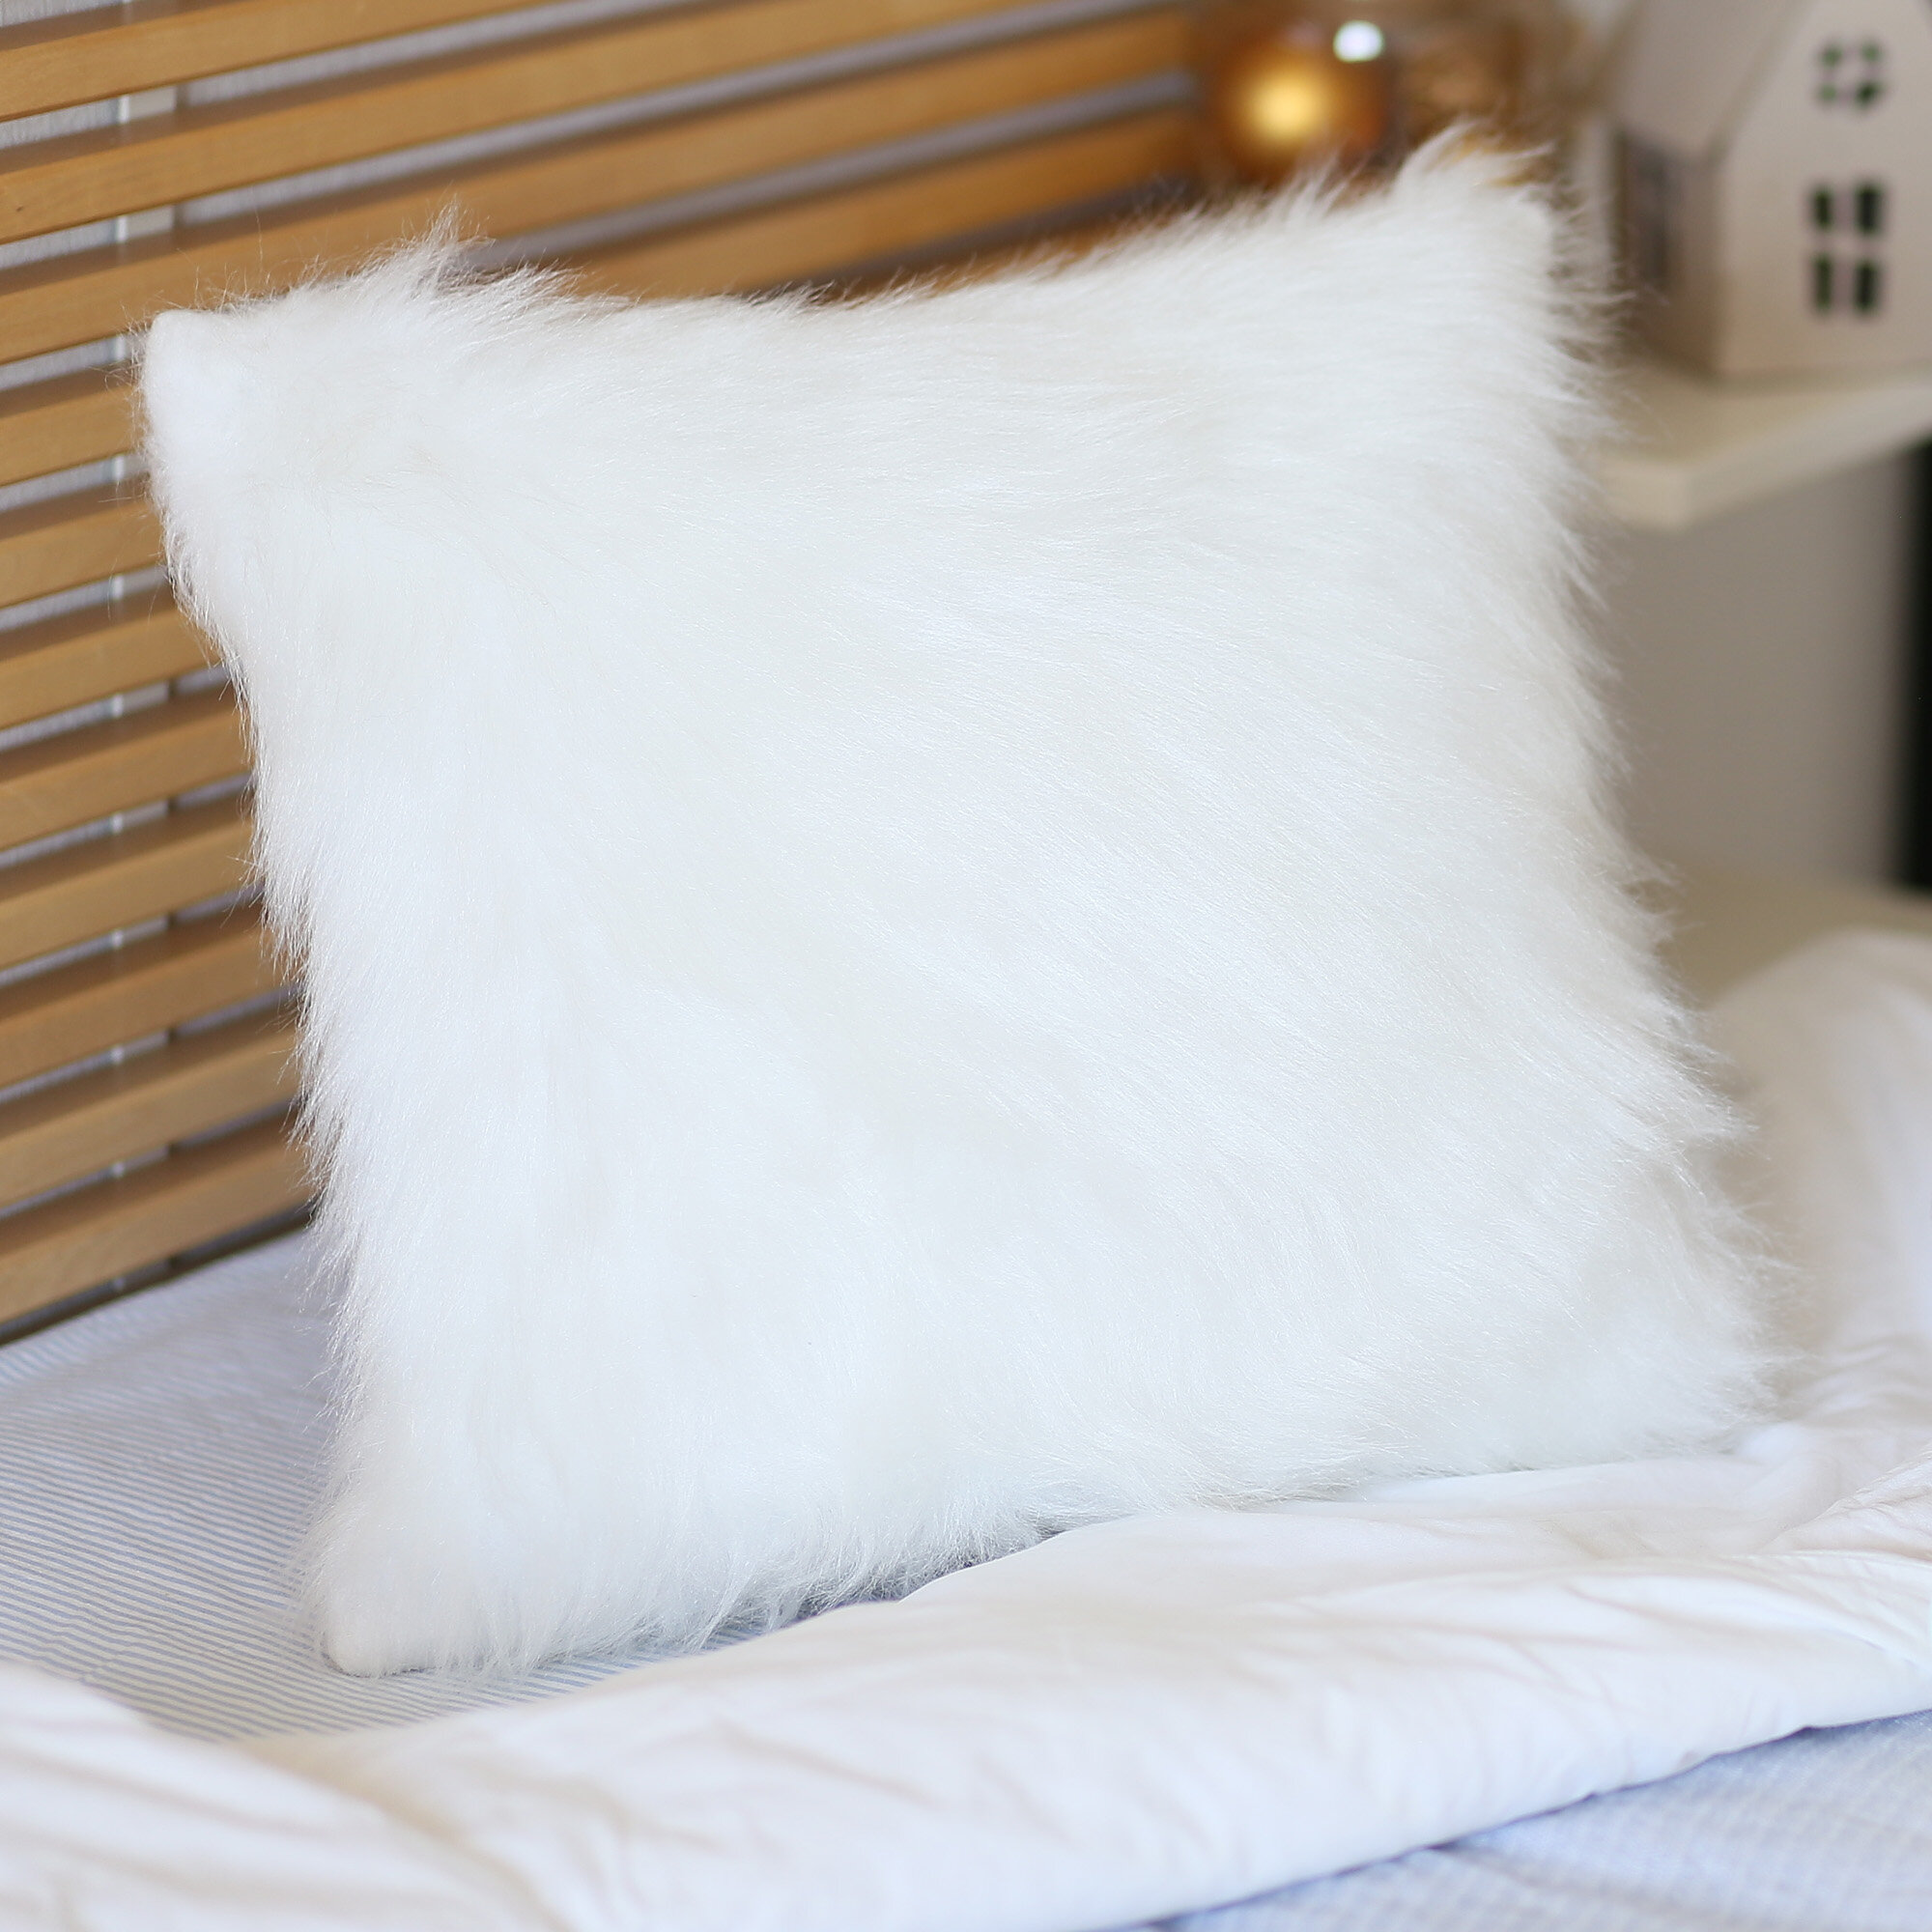 fluffy throw pillows